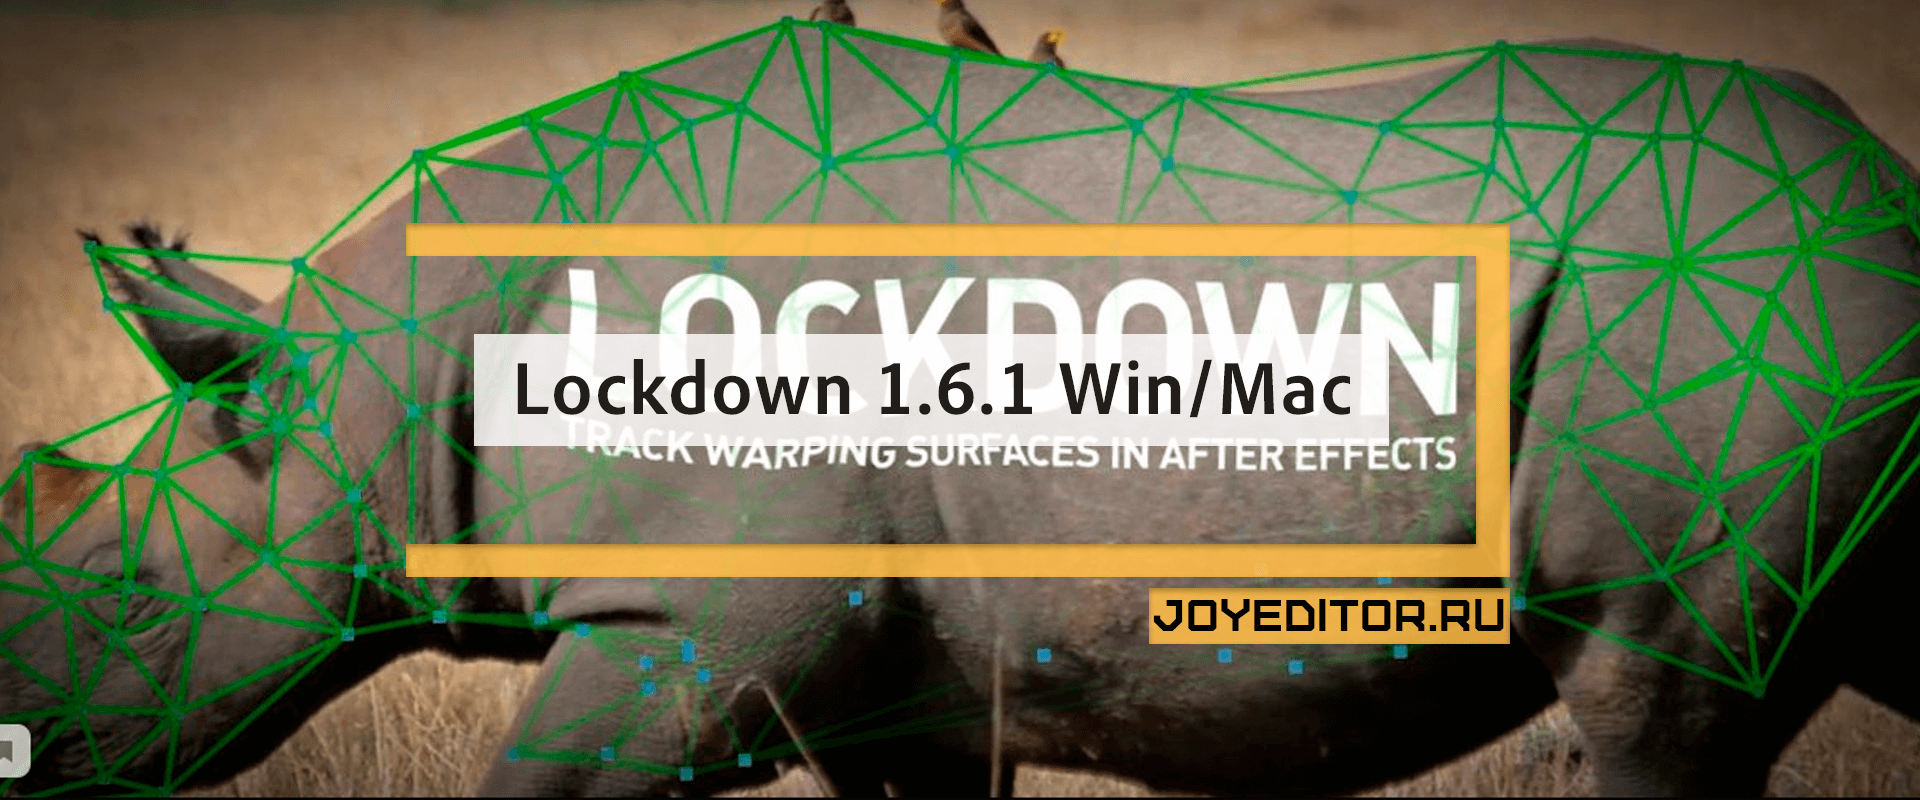 Lockdown 1.6.1 Win/Mac